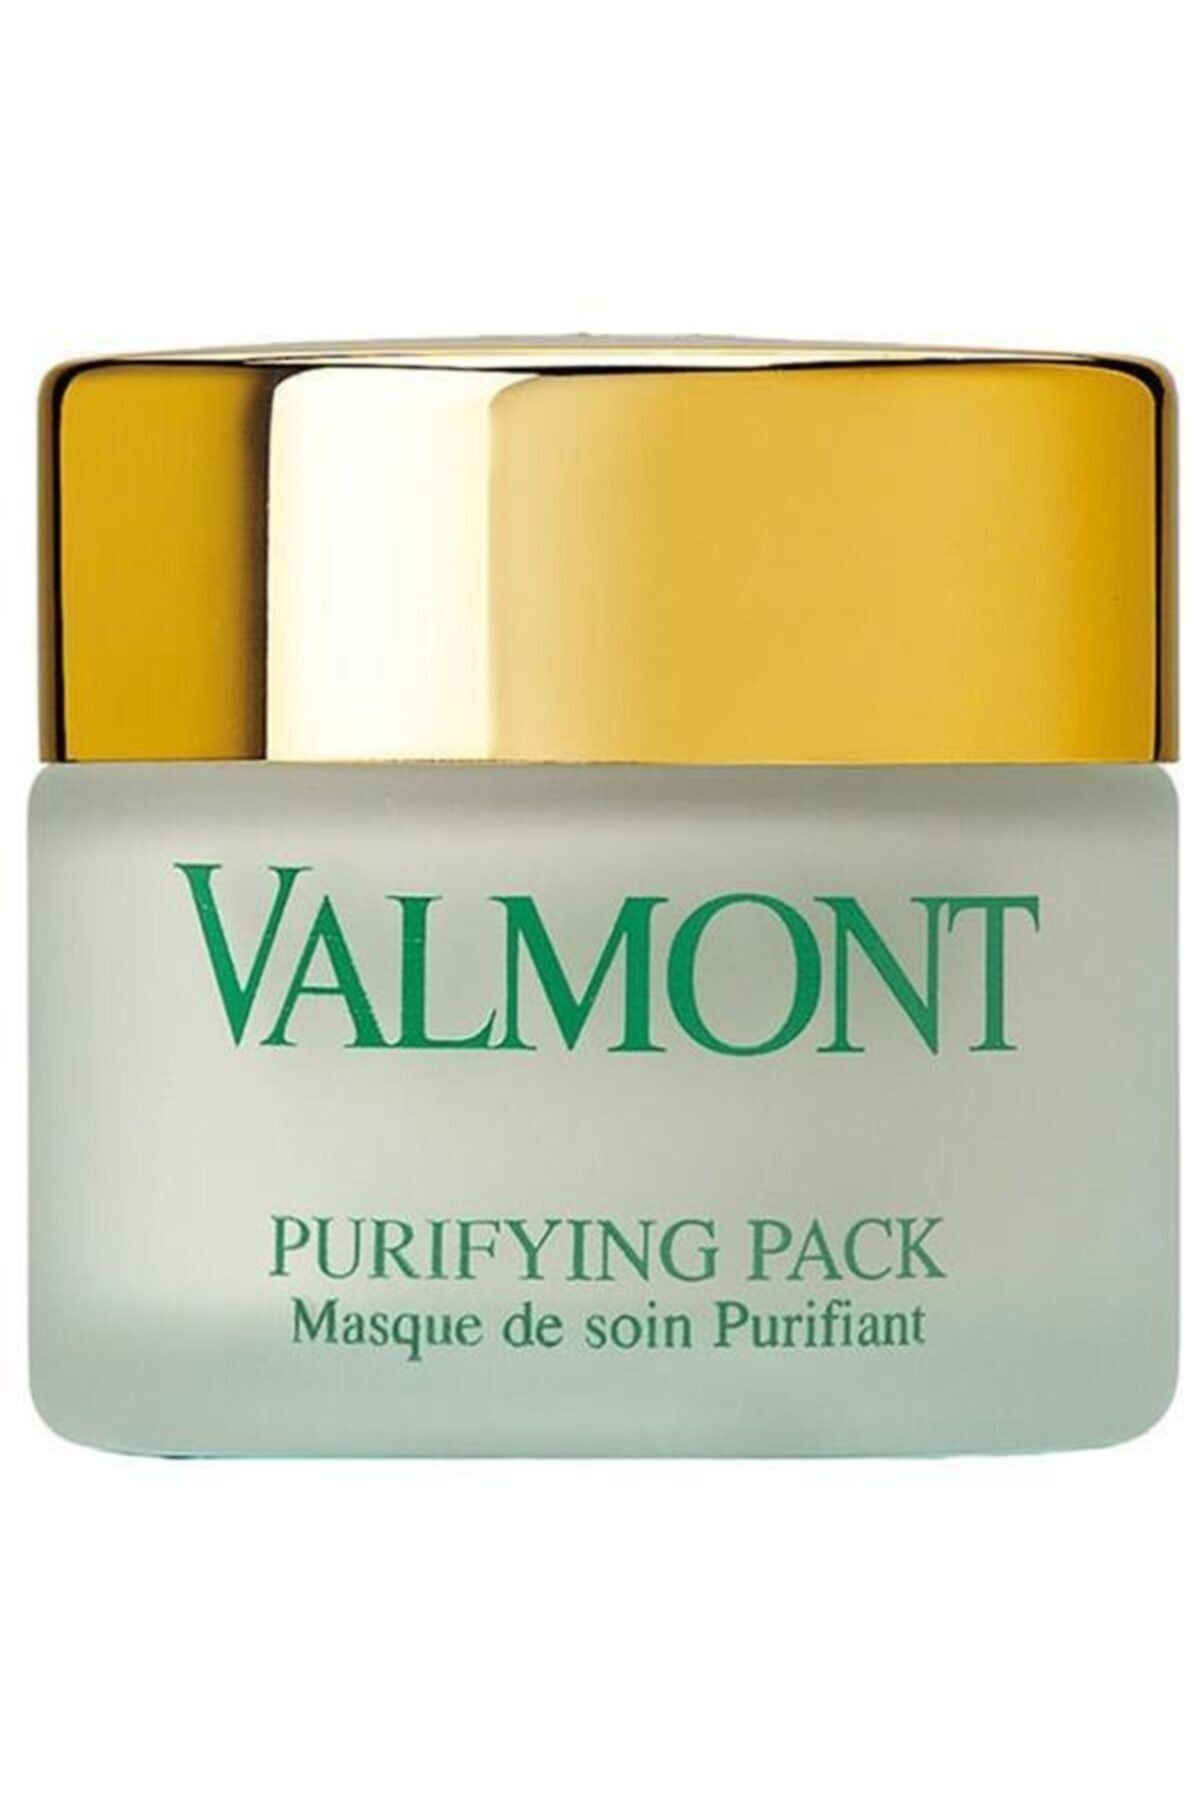 Valmont золушка. Маски Valmont Pack. Valmont маска для лица. Valmont Purifying Pack. Valmont для волос.